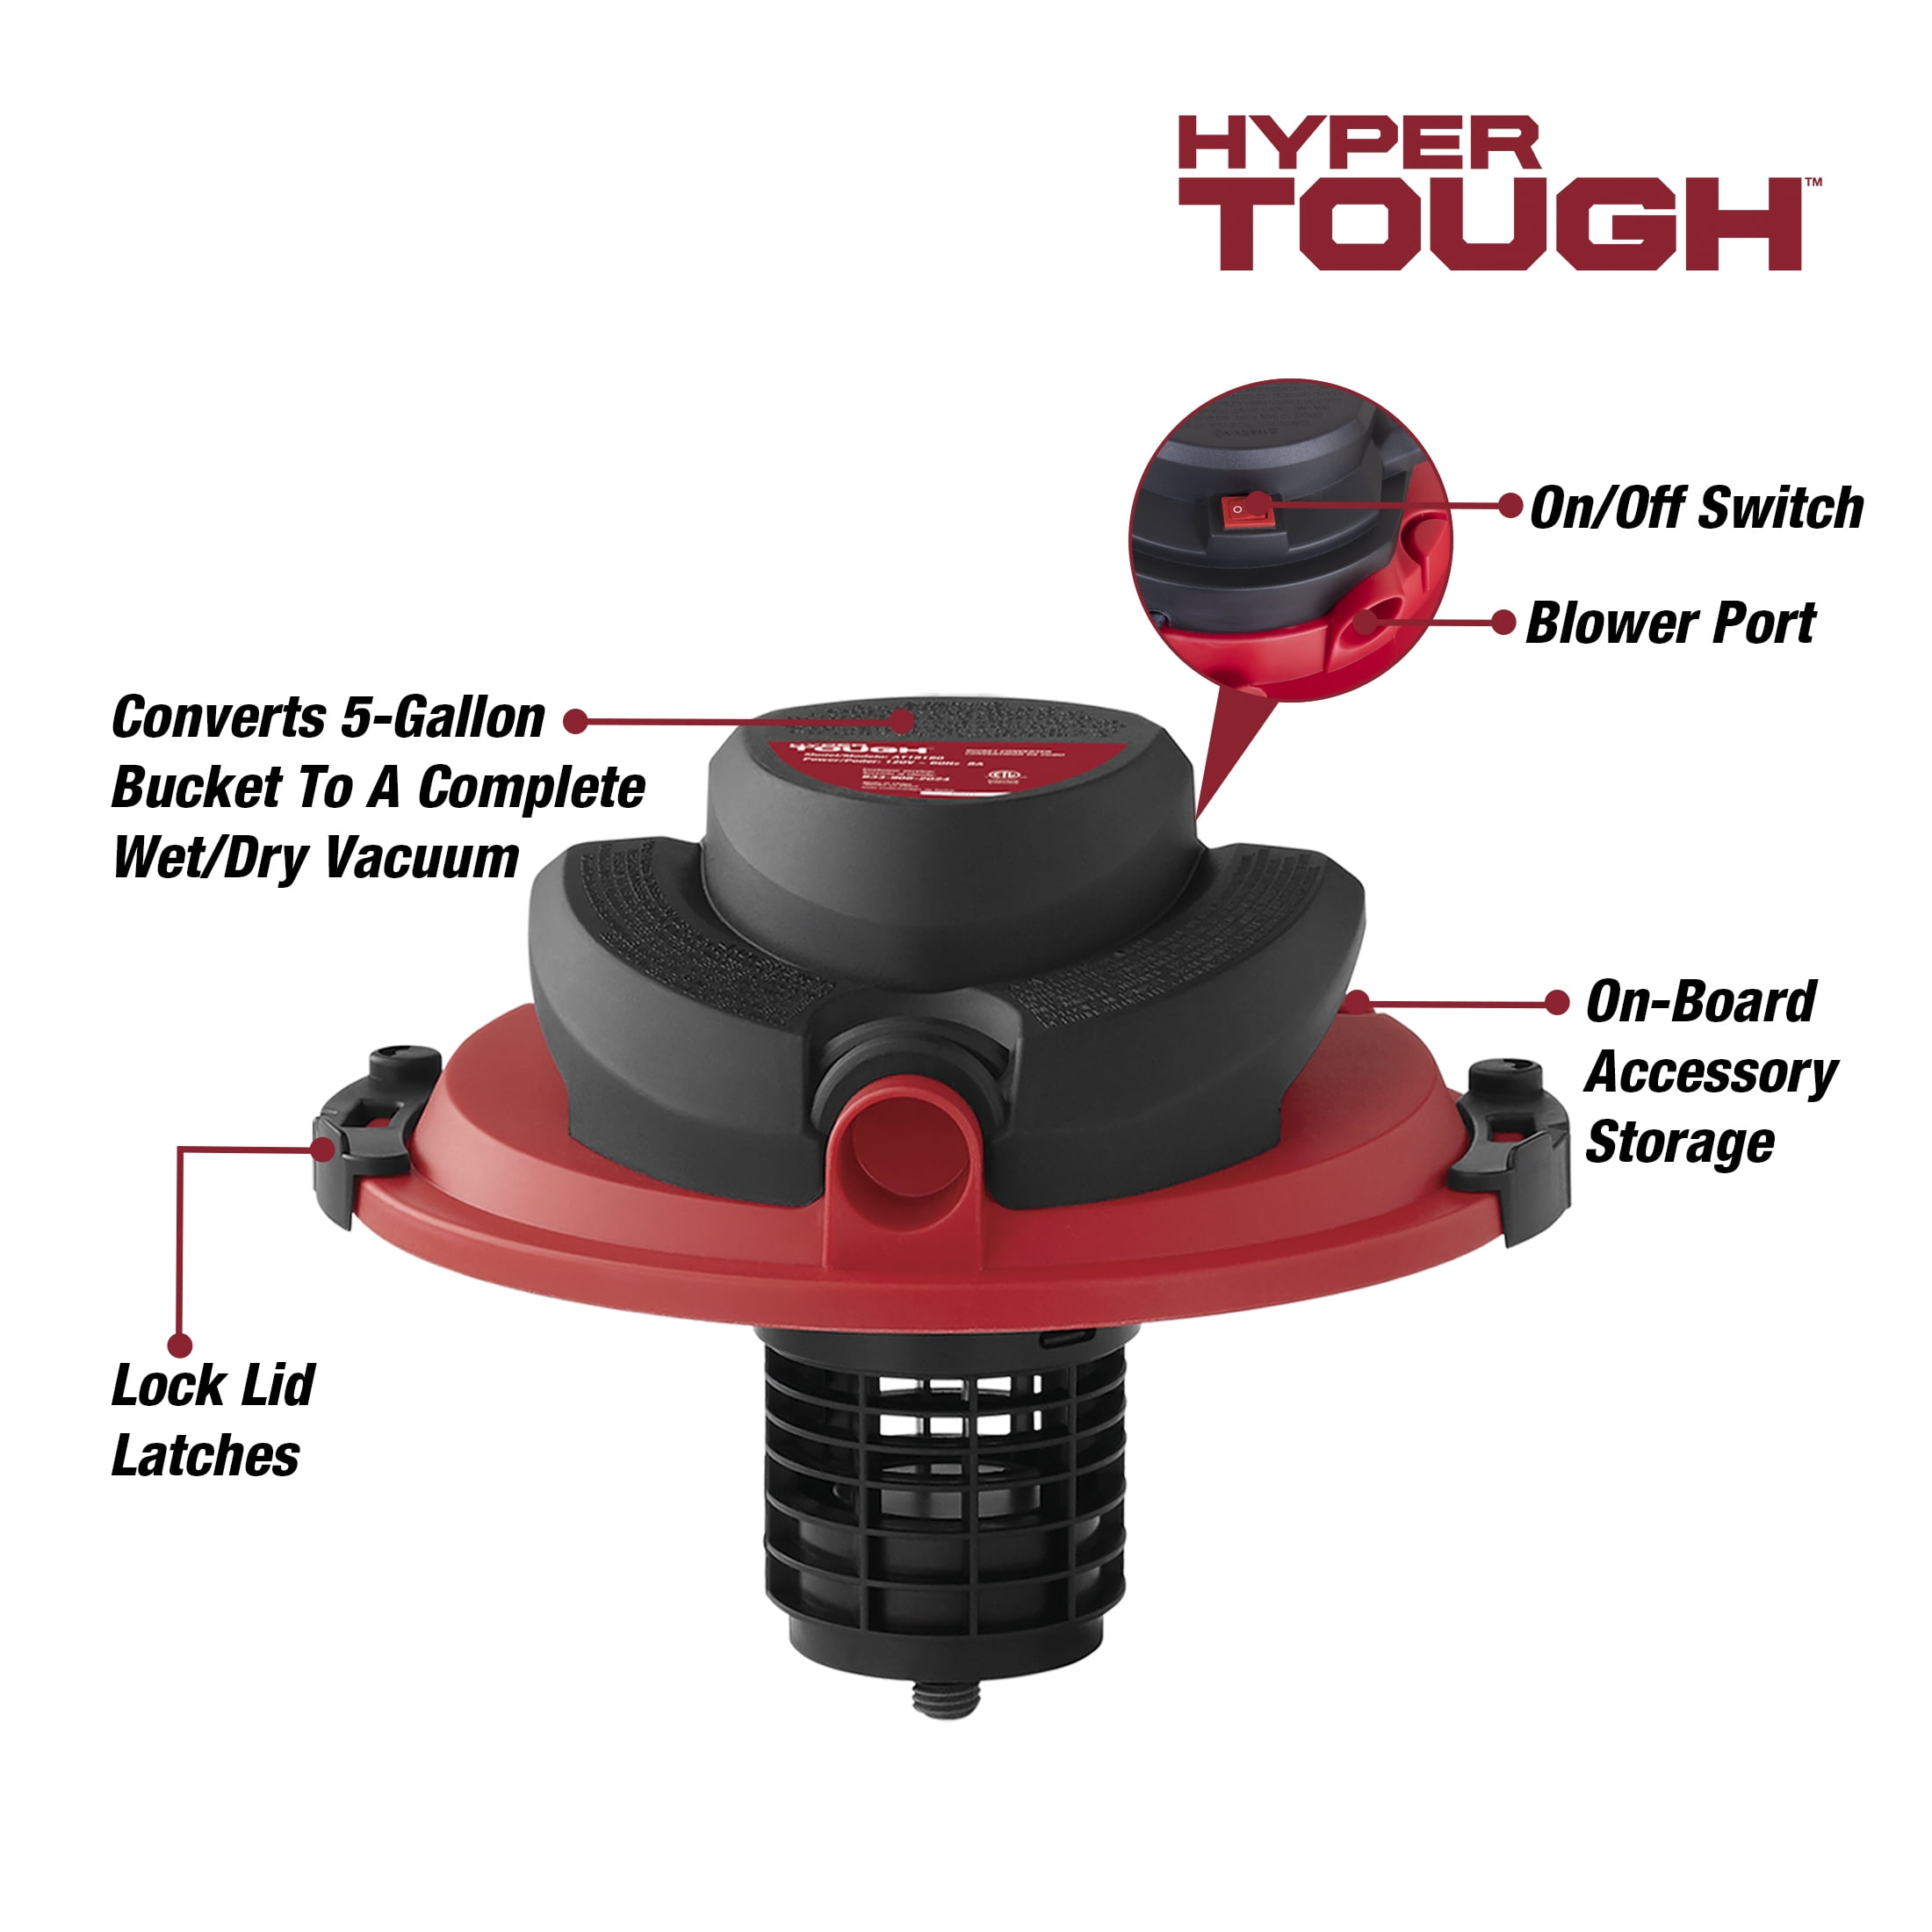 HyperTough 5 Gallon Powerhead Bucket Head Converter- To convert your 5 gallon Bucket into a wet/dry vacuum for the car, garage, home or workshop